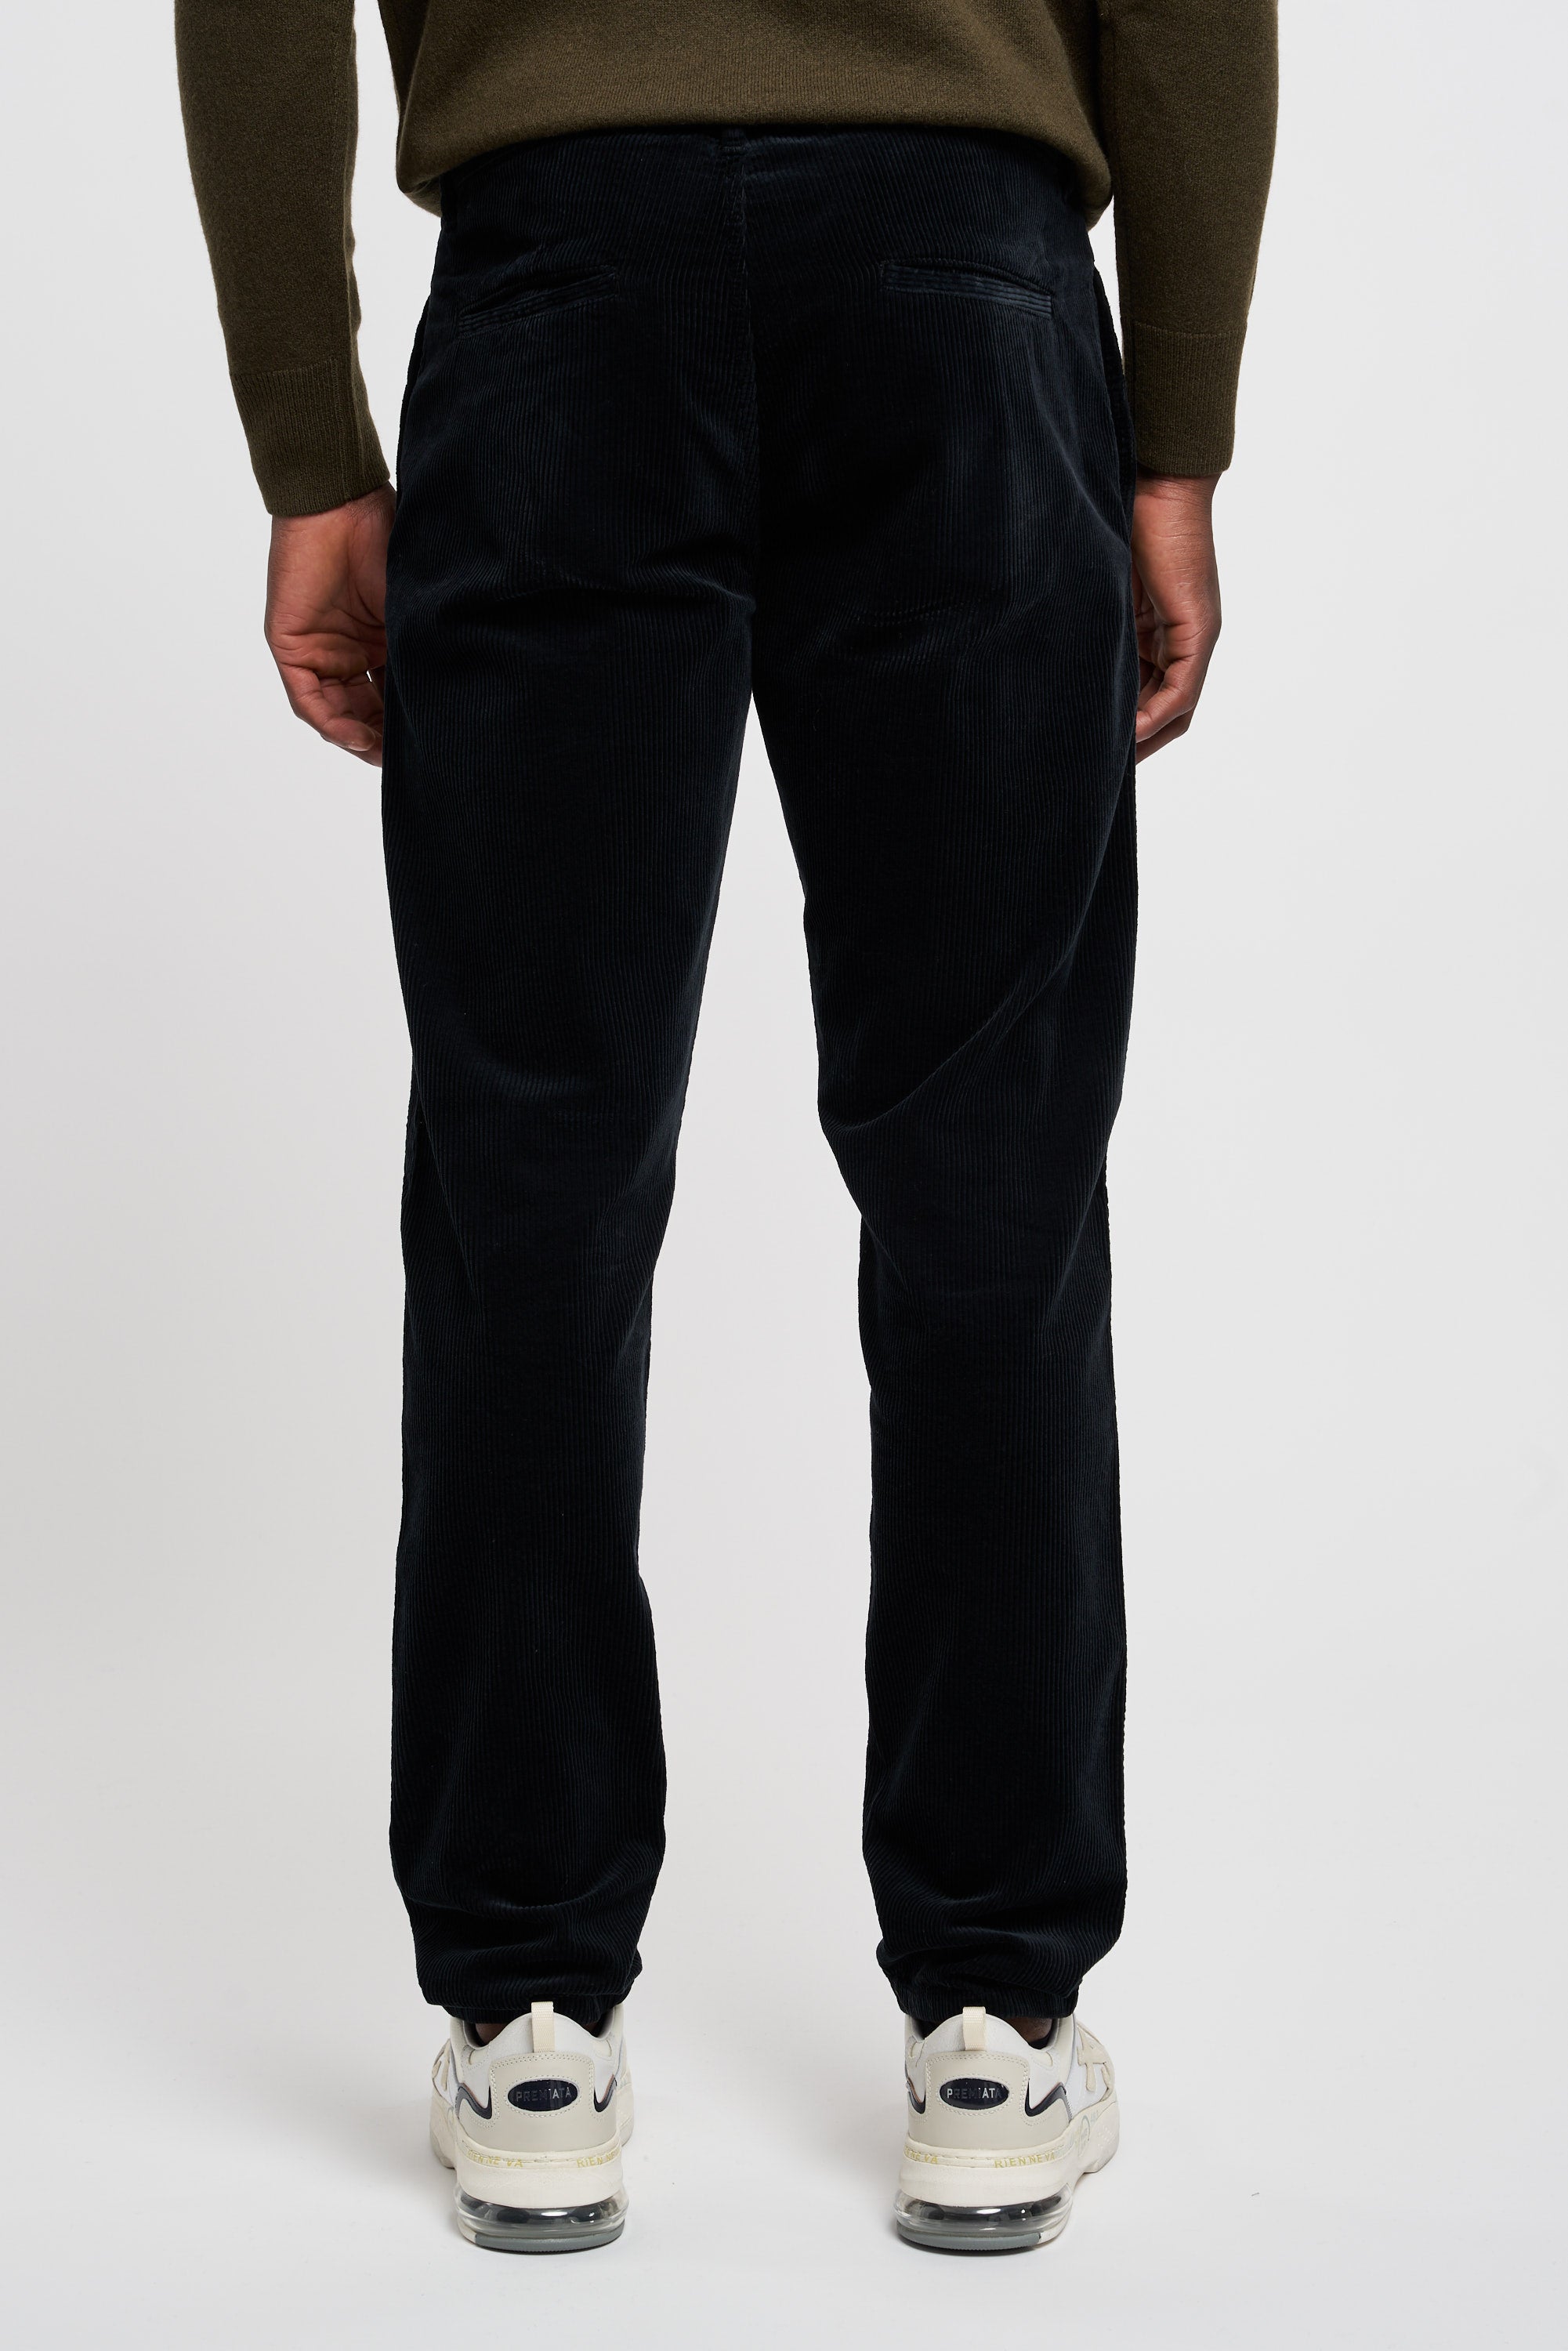 Aspesi Chino Trousers in Black Corduroy-6